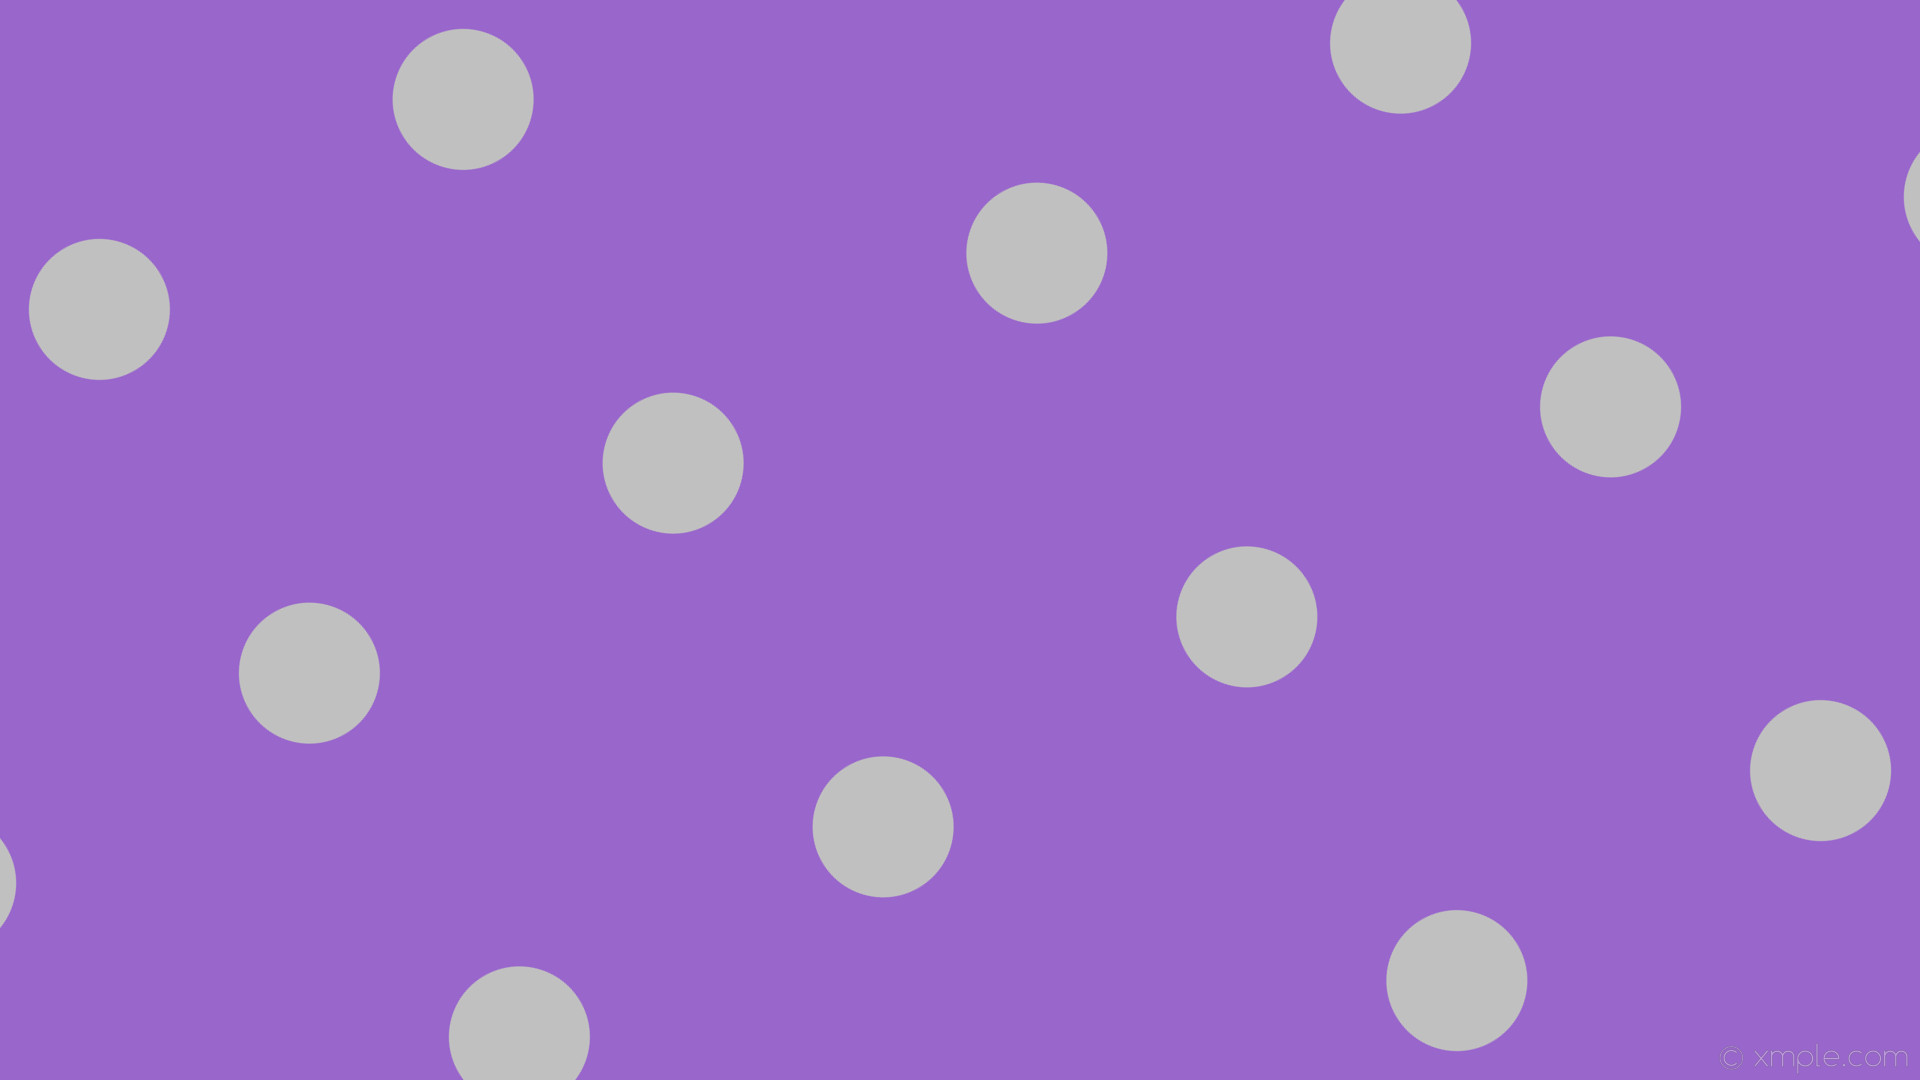 wallpaper purple grey spots dots polka amethyst silver #9966cc #c0c0c0 120Â°  141px 420px